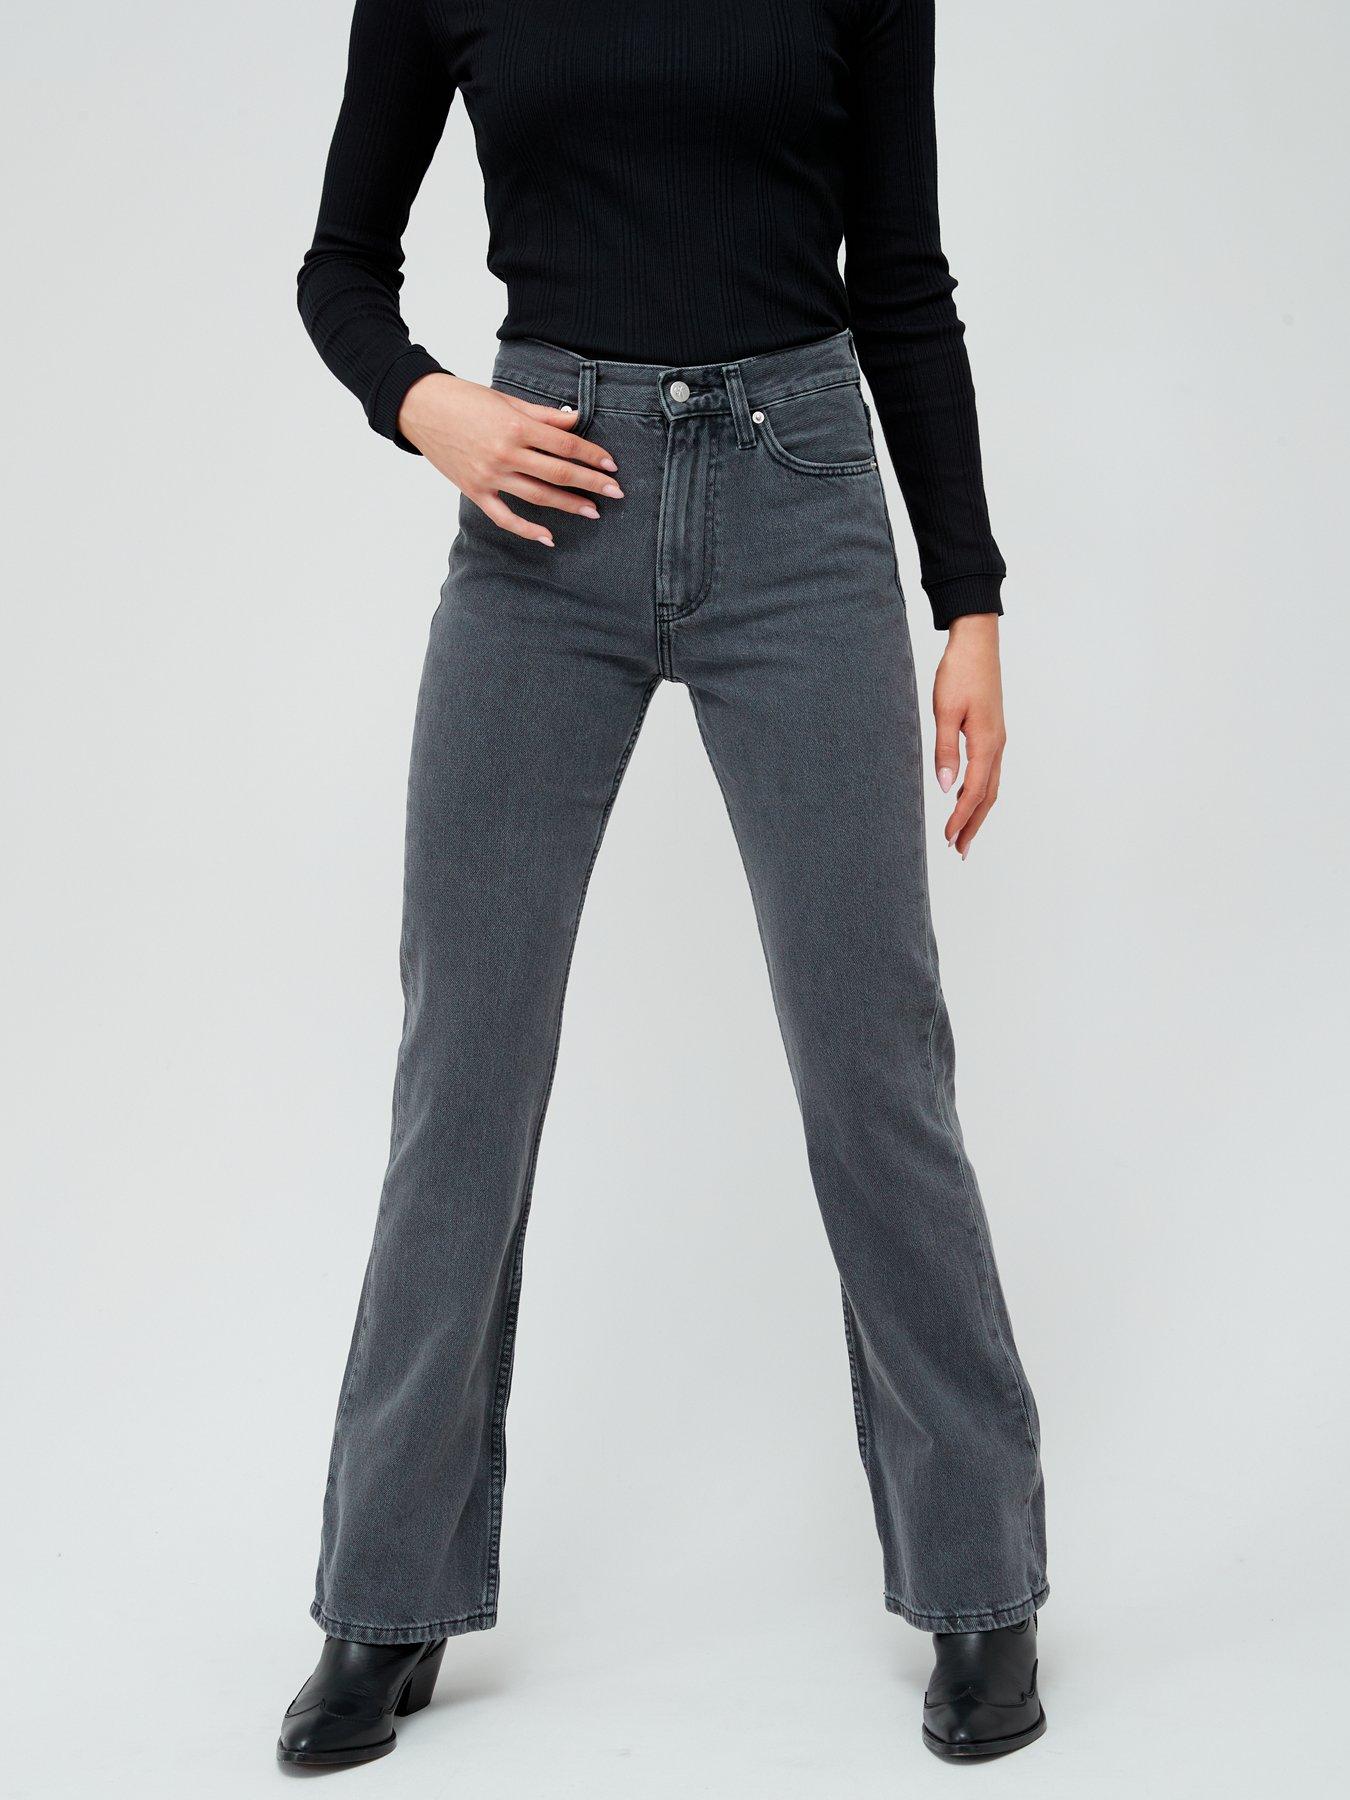 Calvin Klein Jeans Authentic Bootcut Jean - Black 